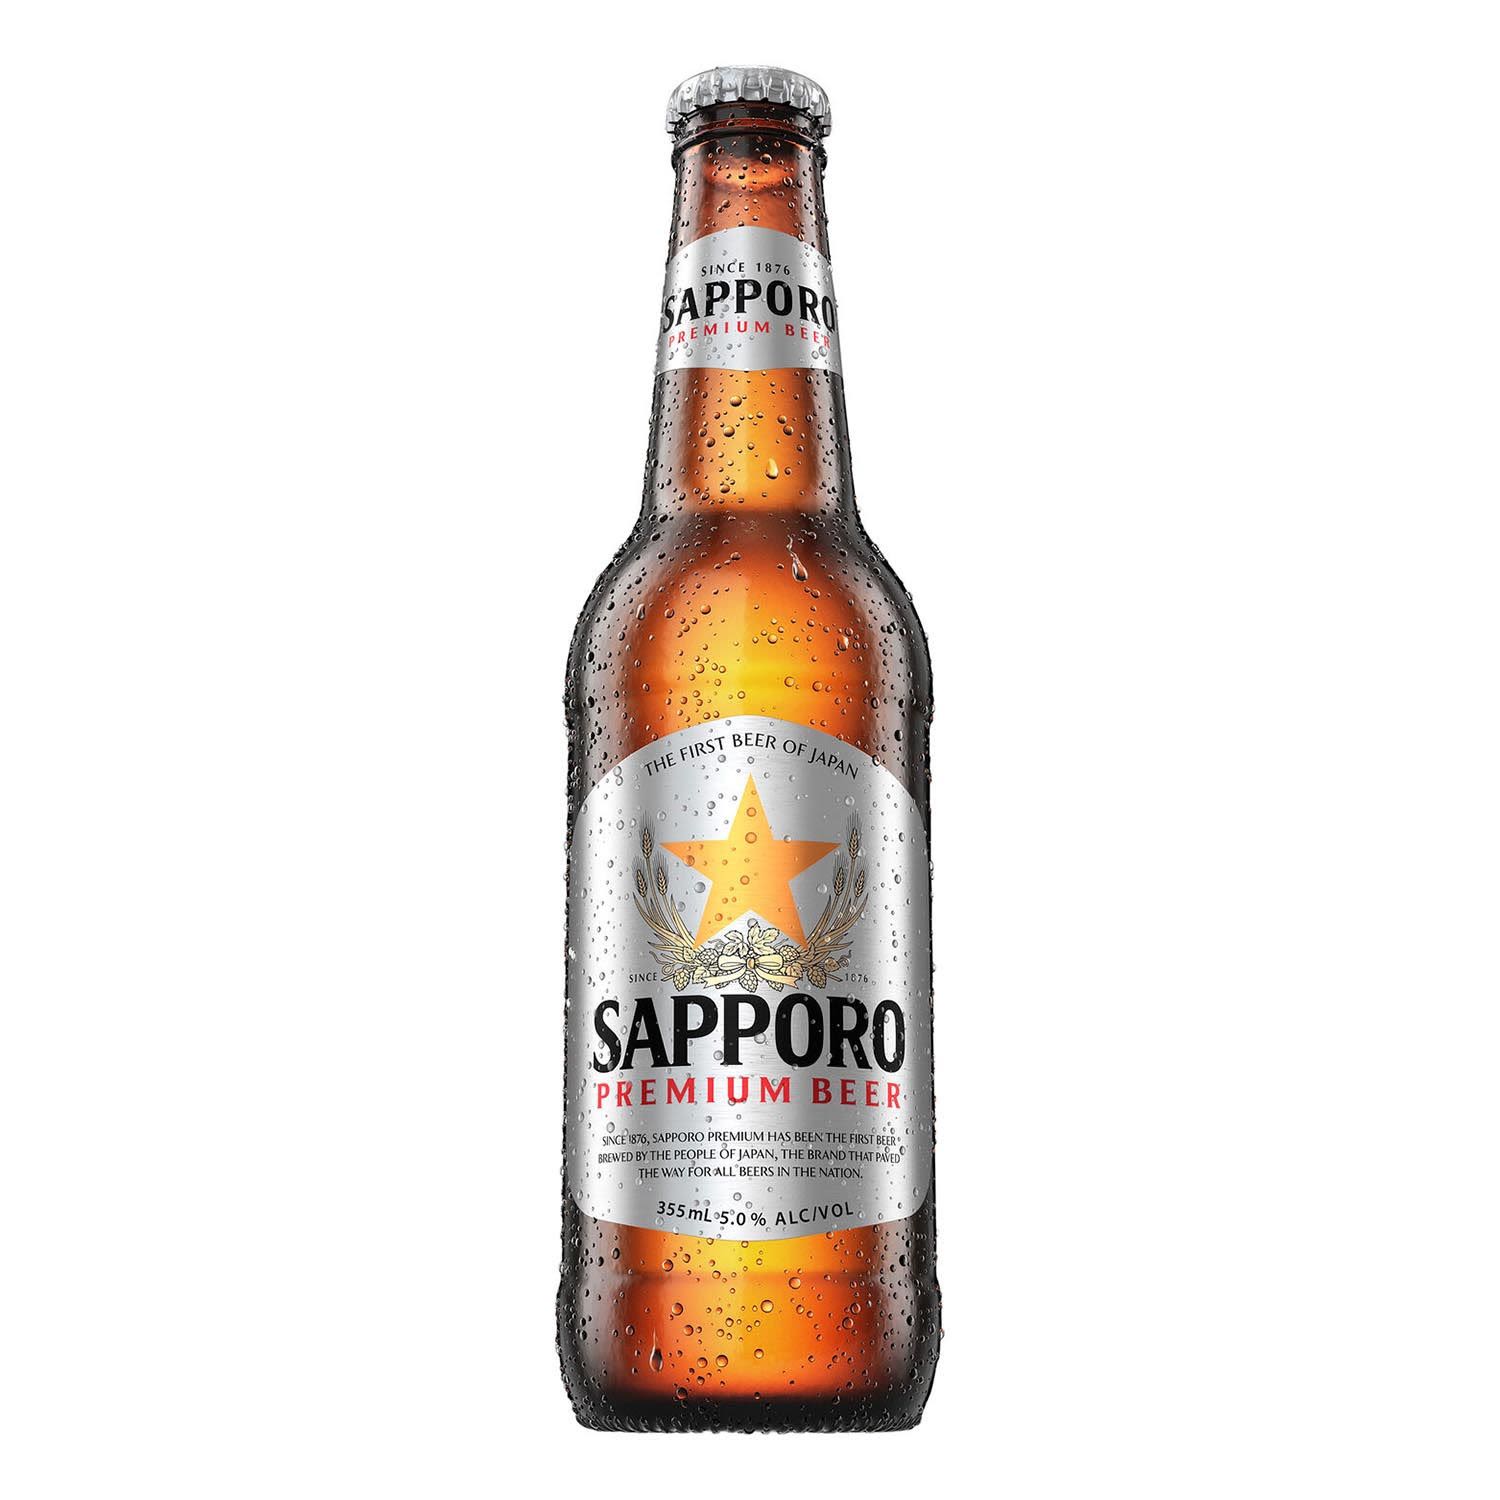 Sapporo Premium Beer Bottle 355mL